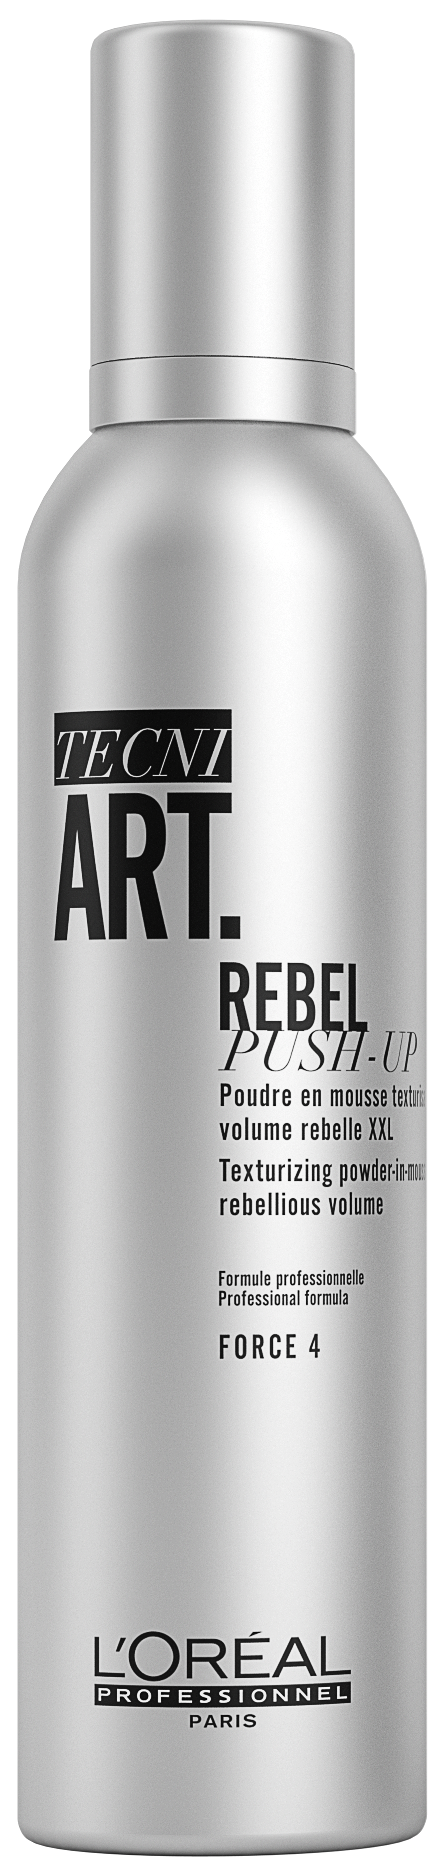 Пудровый мусс Tecni.Art Rebel Push-up для объема волос, 250 мл